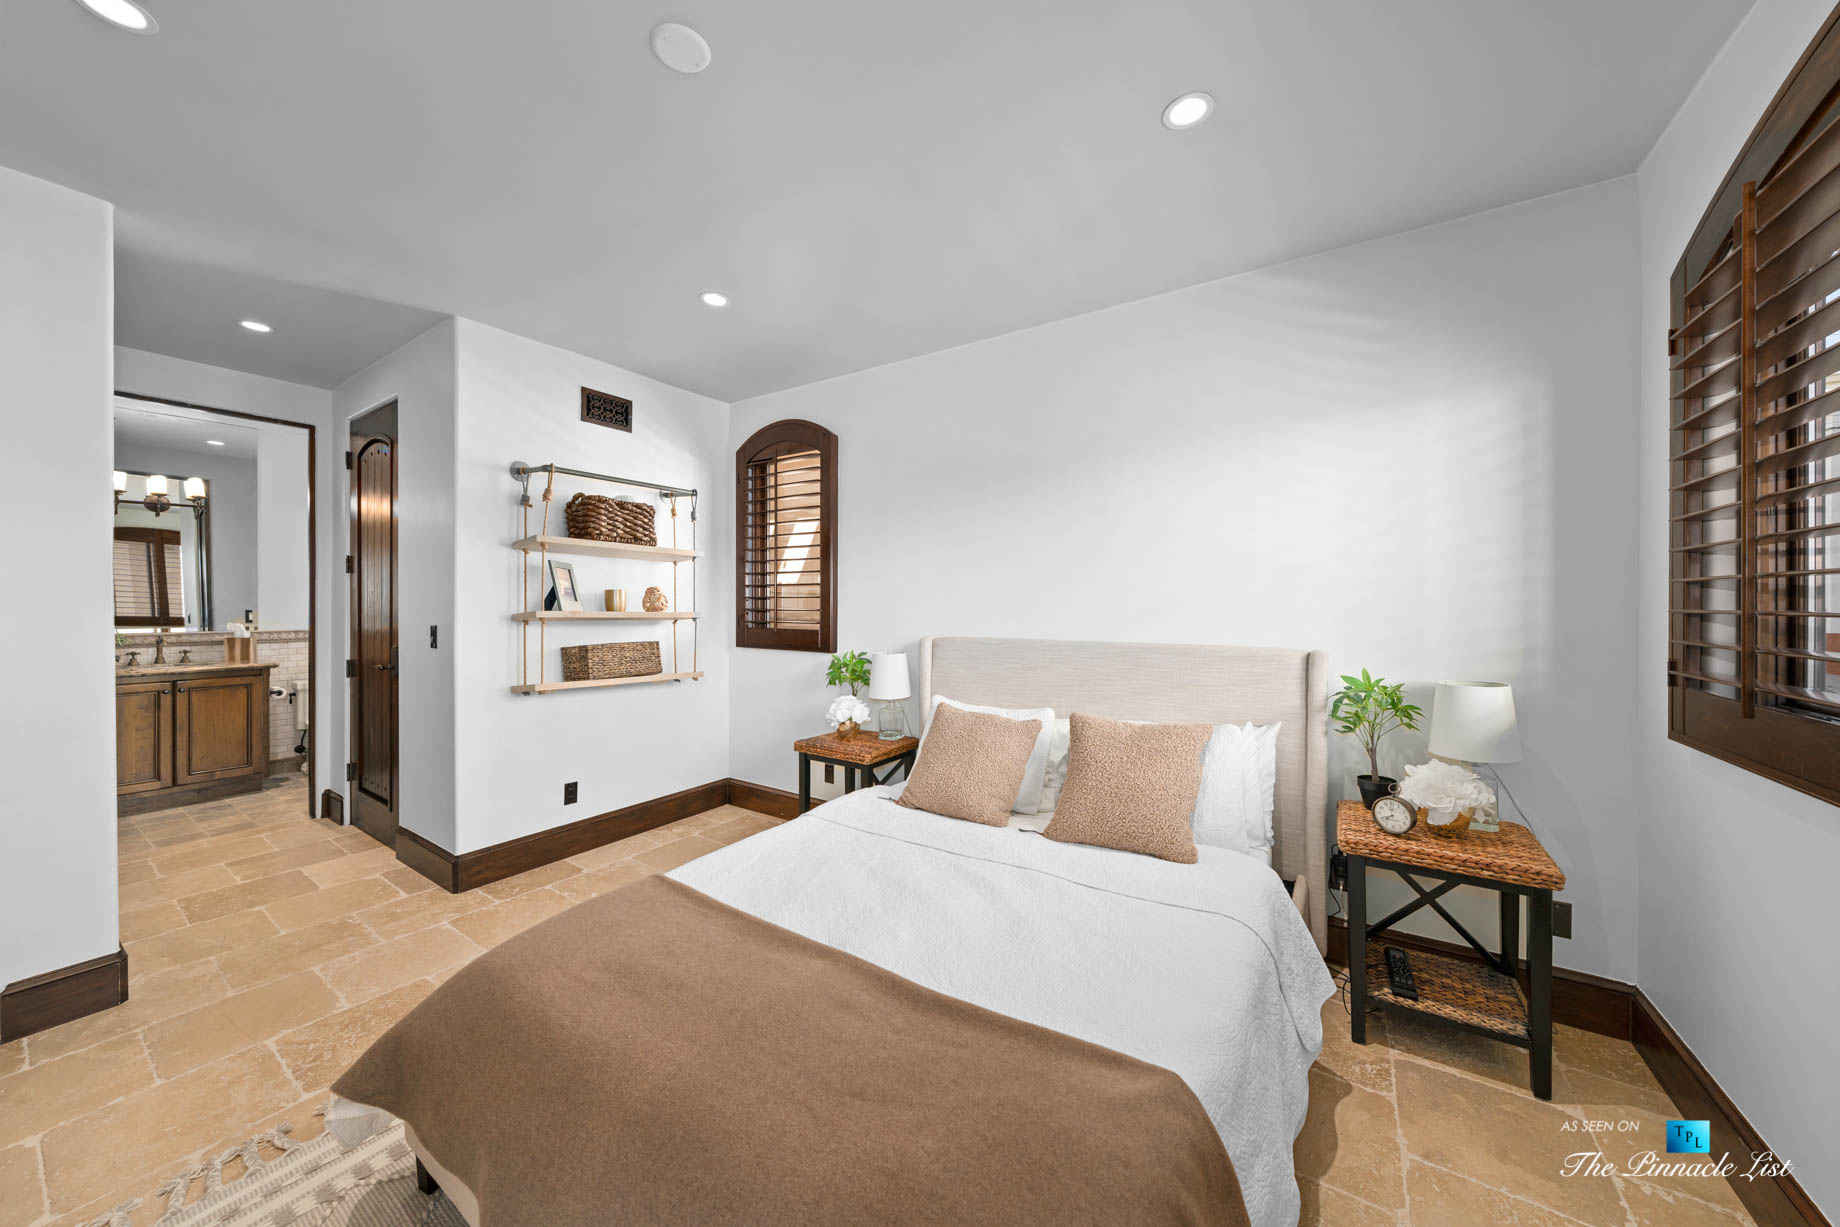 216 7th St, Manhattan Beach, CA, USA – Luxury Real Estate – Coastal Villa Home – Guest Bedroom